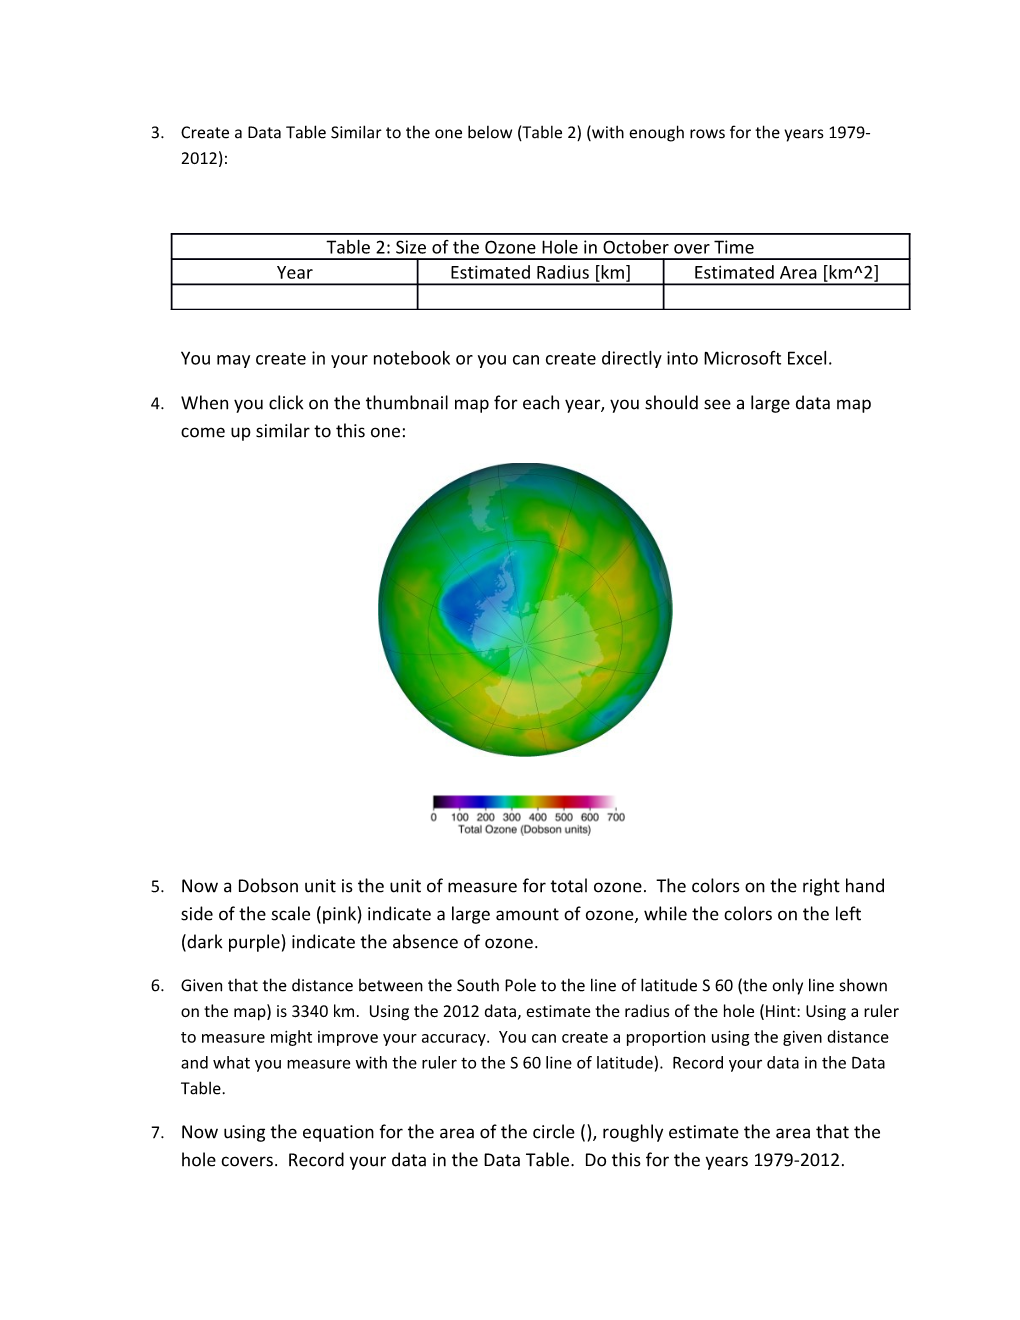 Procedure for Ozone Hole Activity